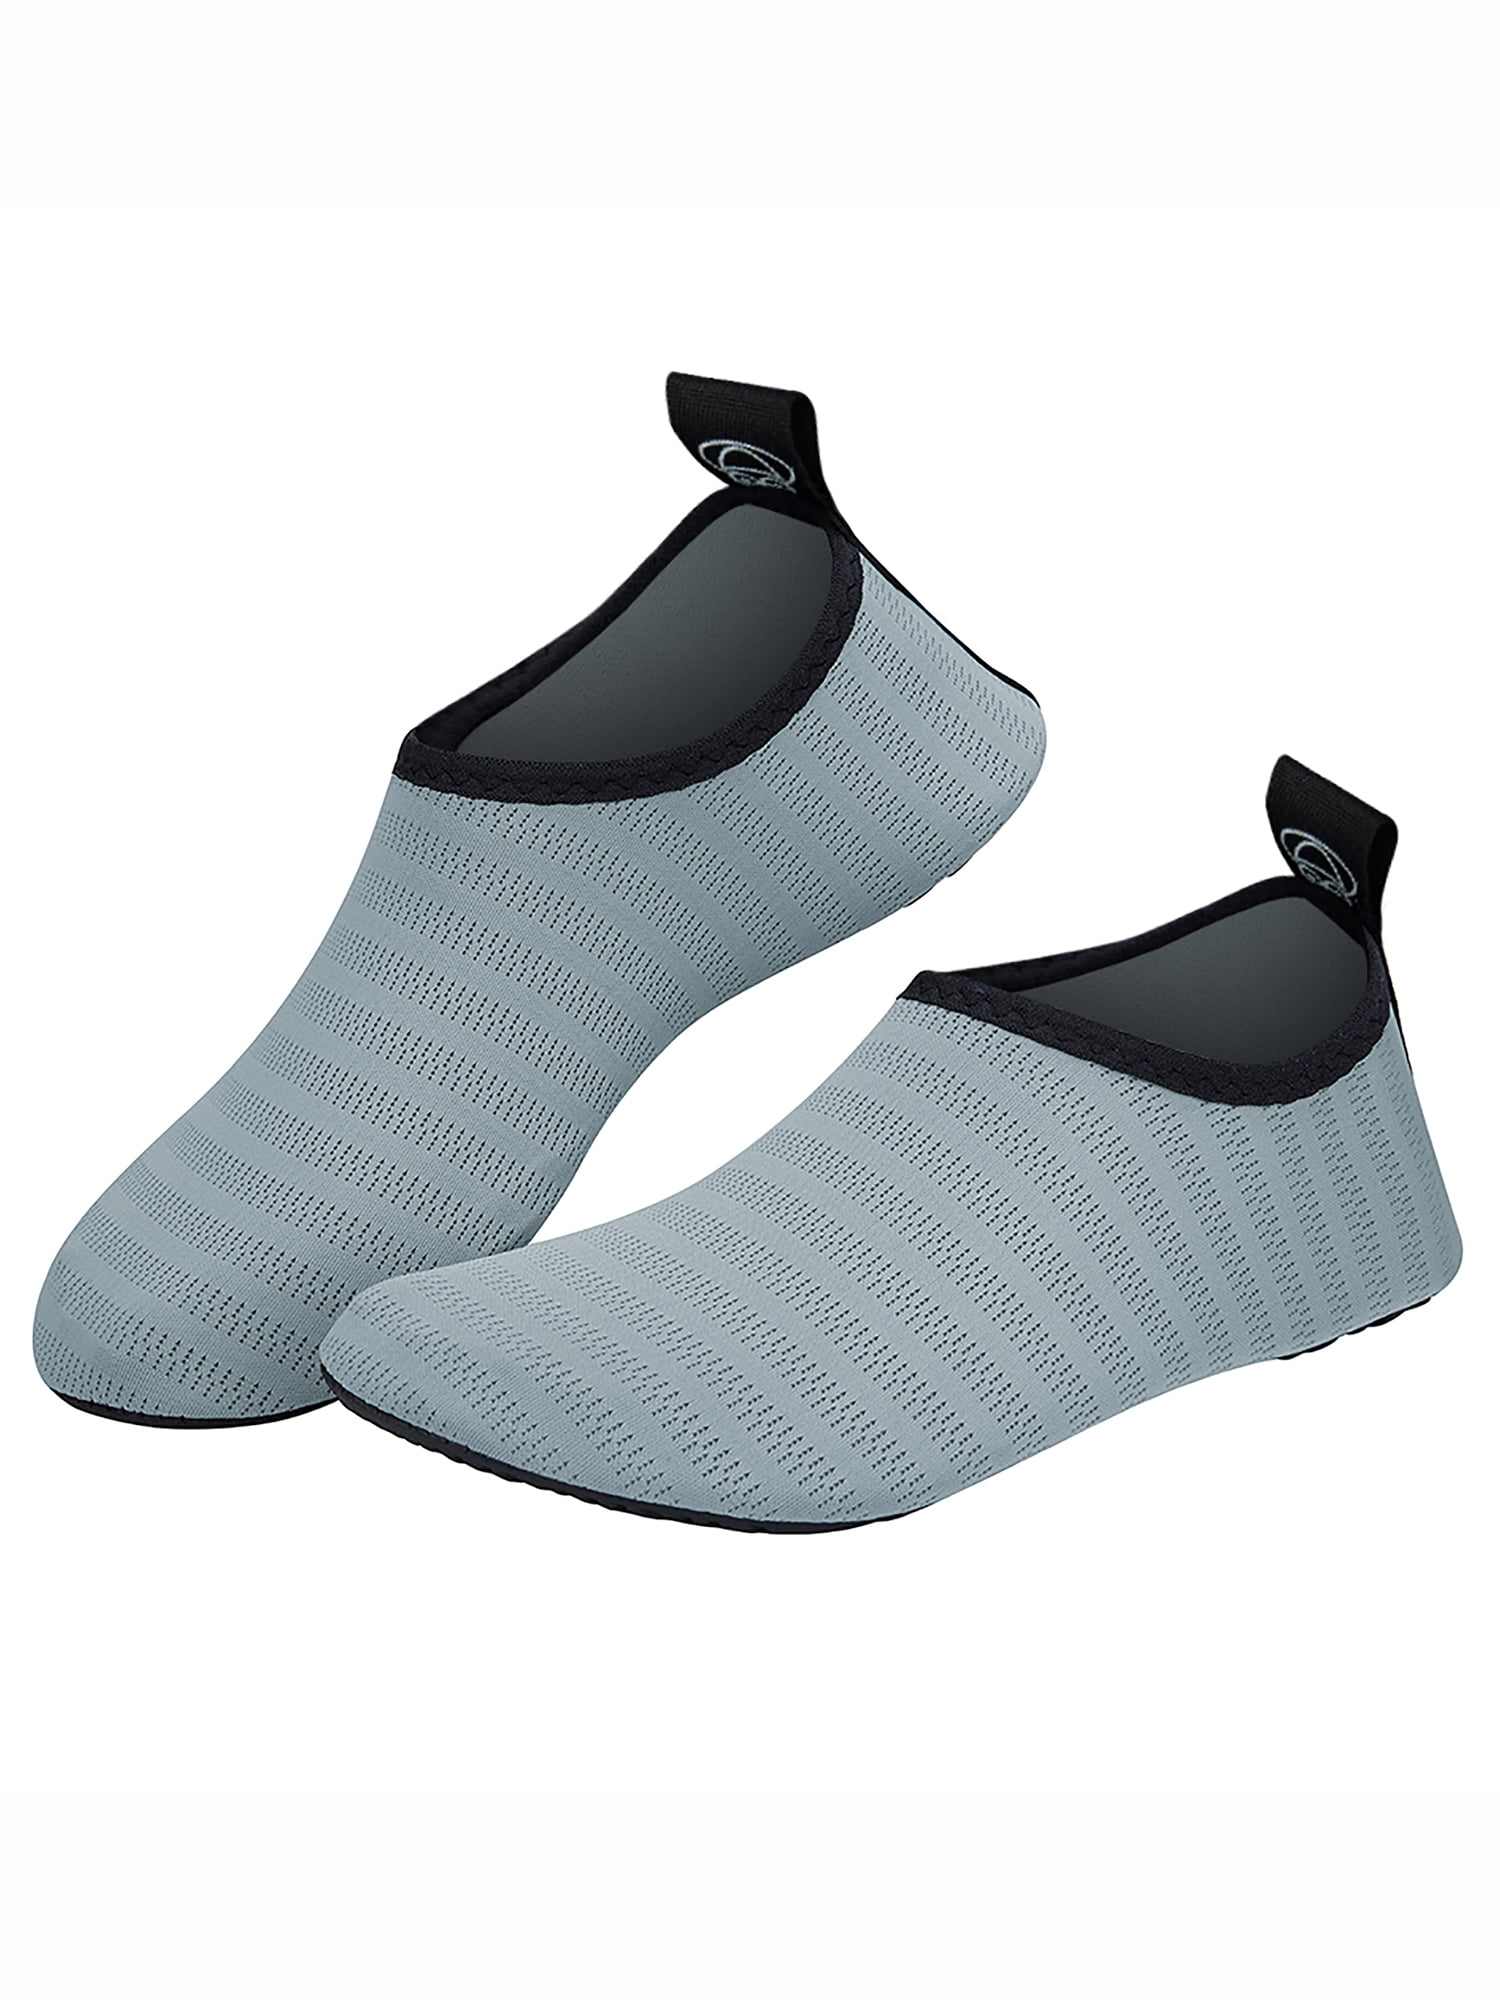 Water-Shoes-Swim-Shoes Quick-Dry Barefoot Aqua-Socks-Beach-Shoes for Pool Yoga Surf for Women-Men 